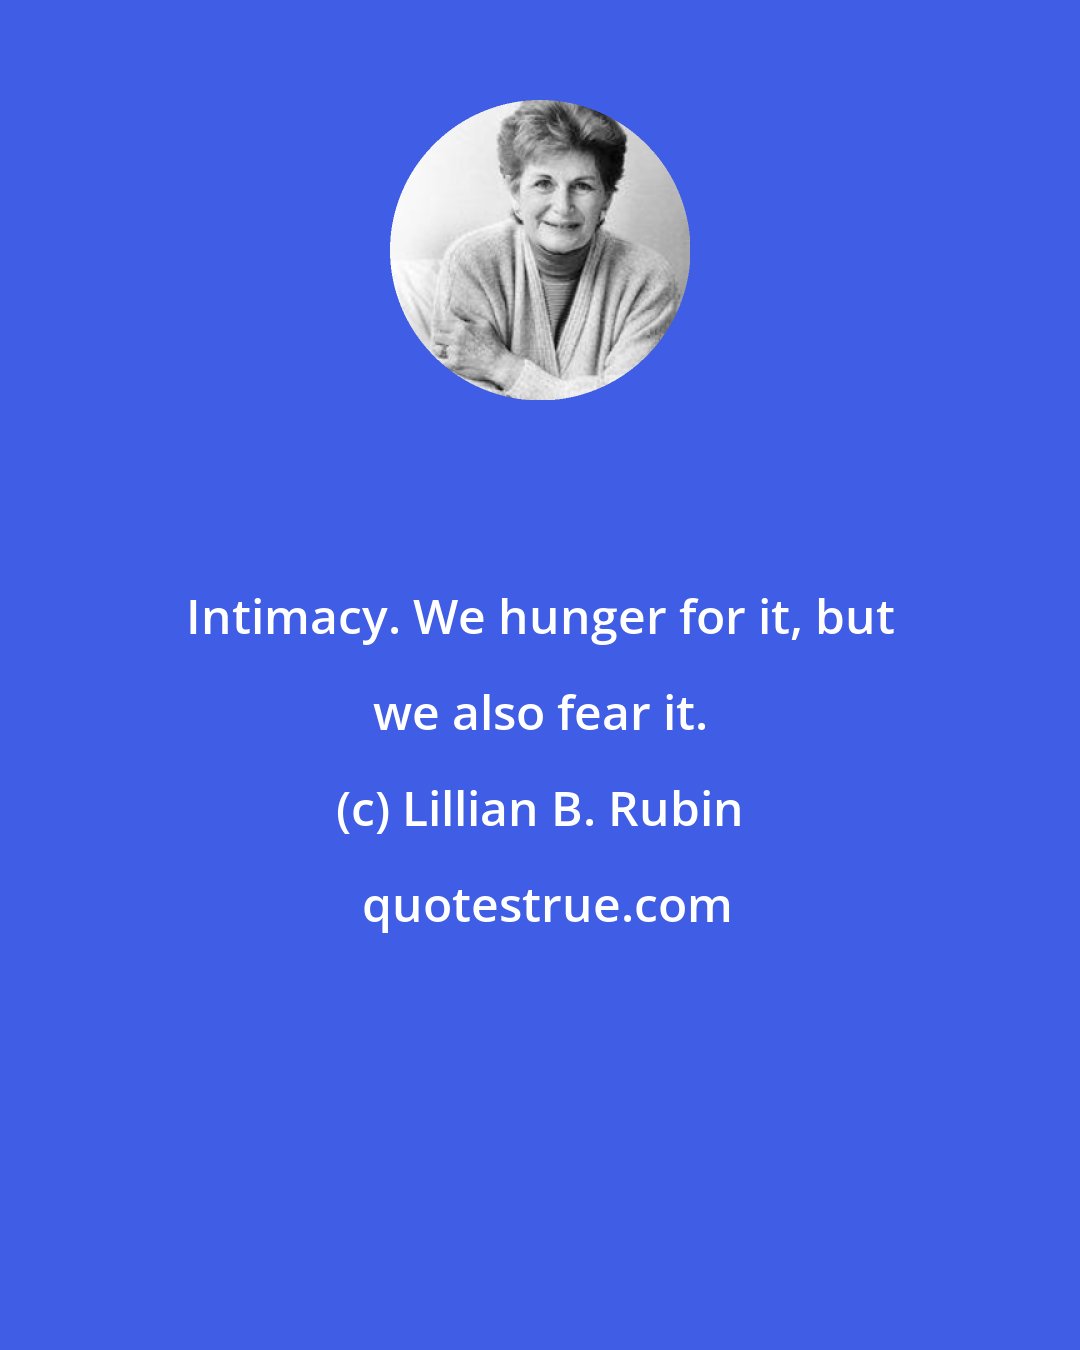 Lillian B. Rubin: Intimacy. We hunger for it, but we also fear it.